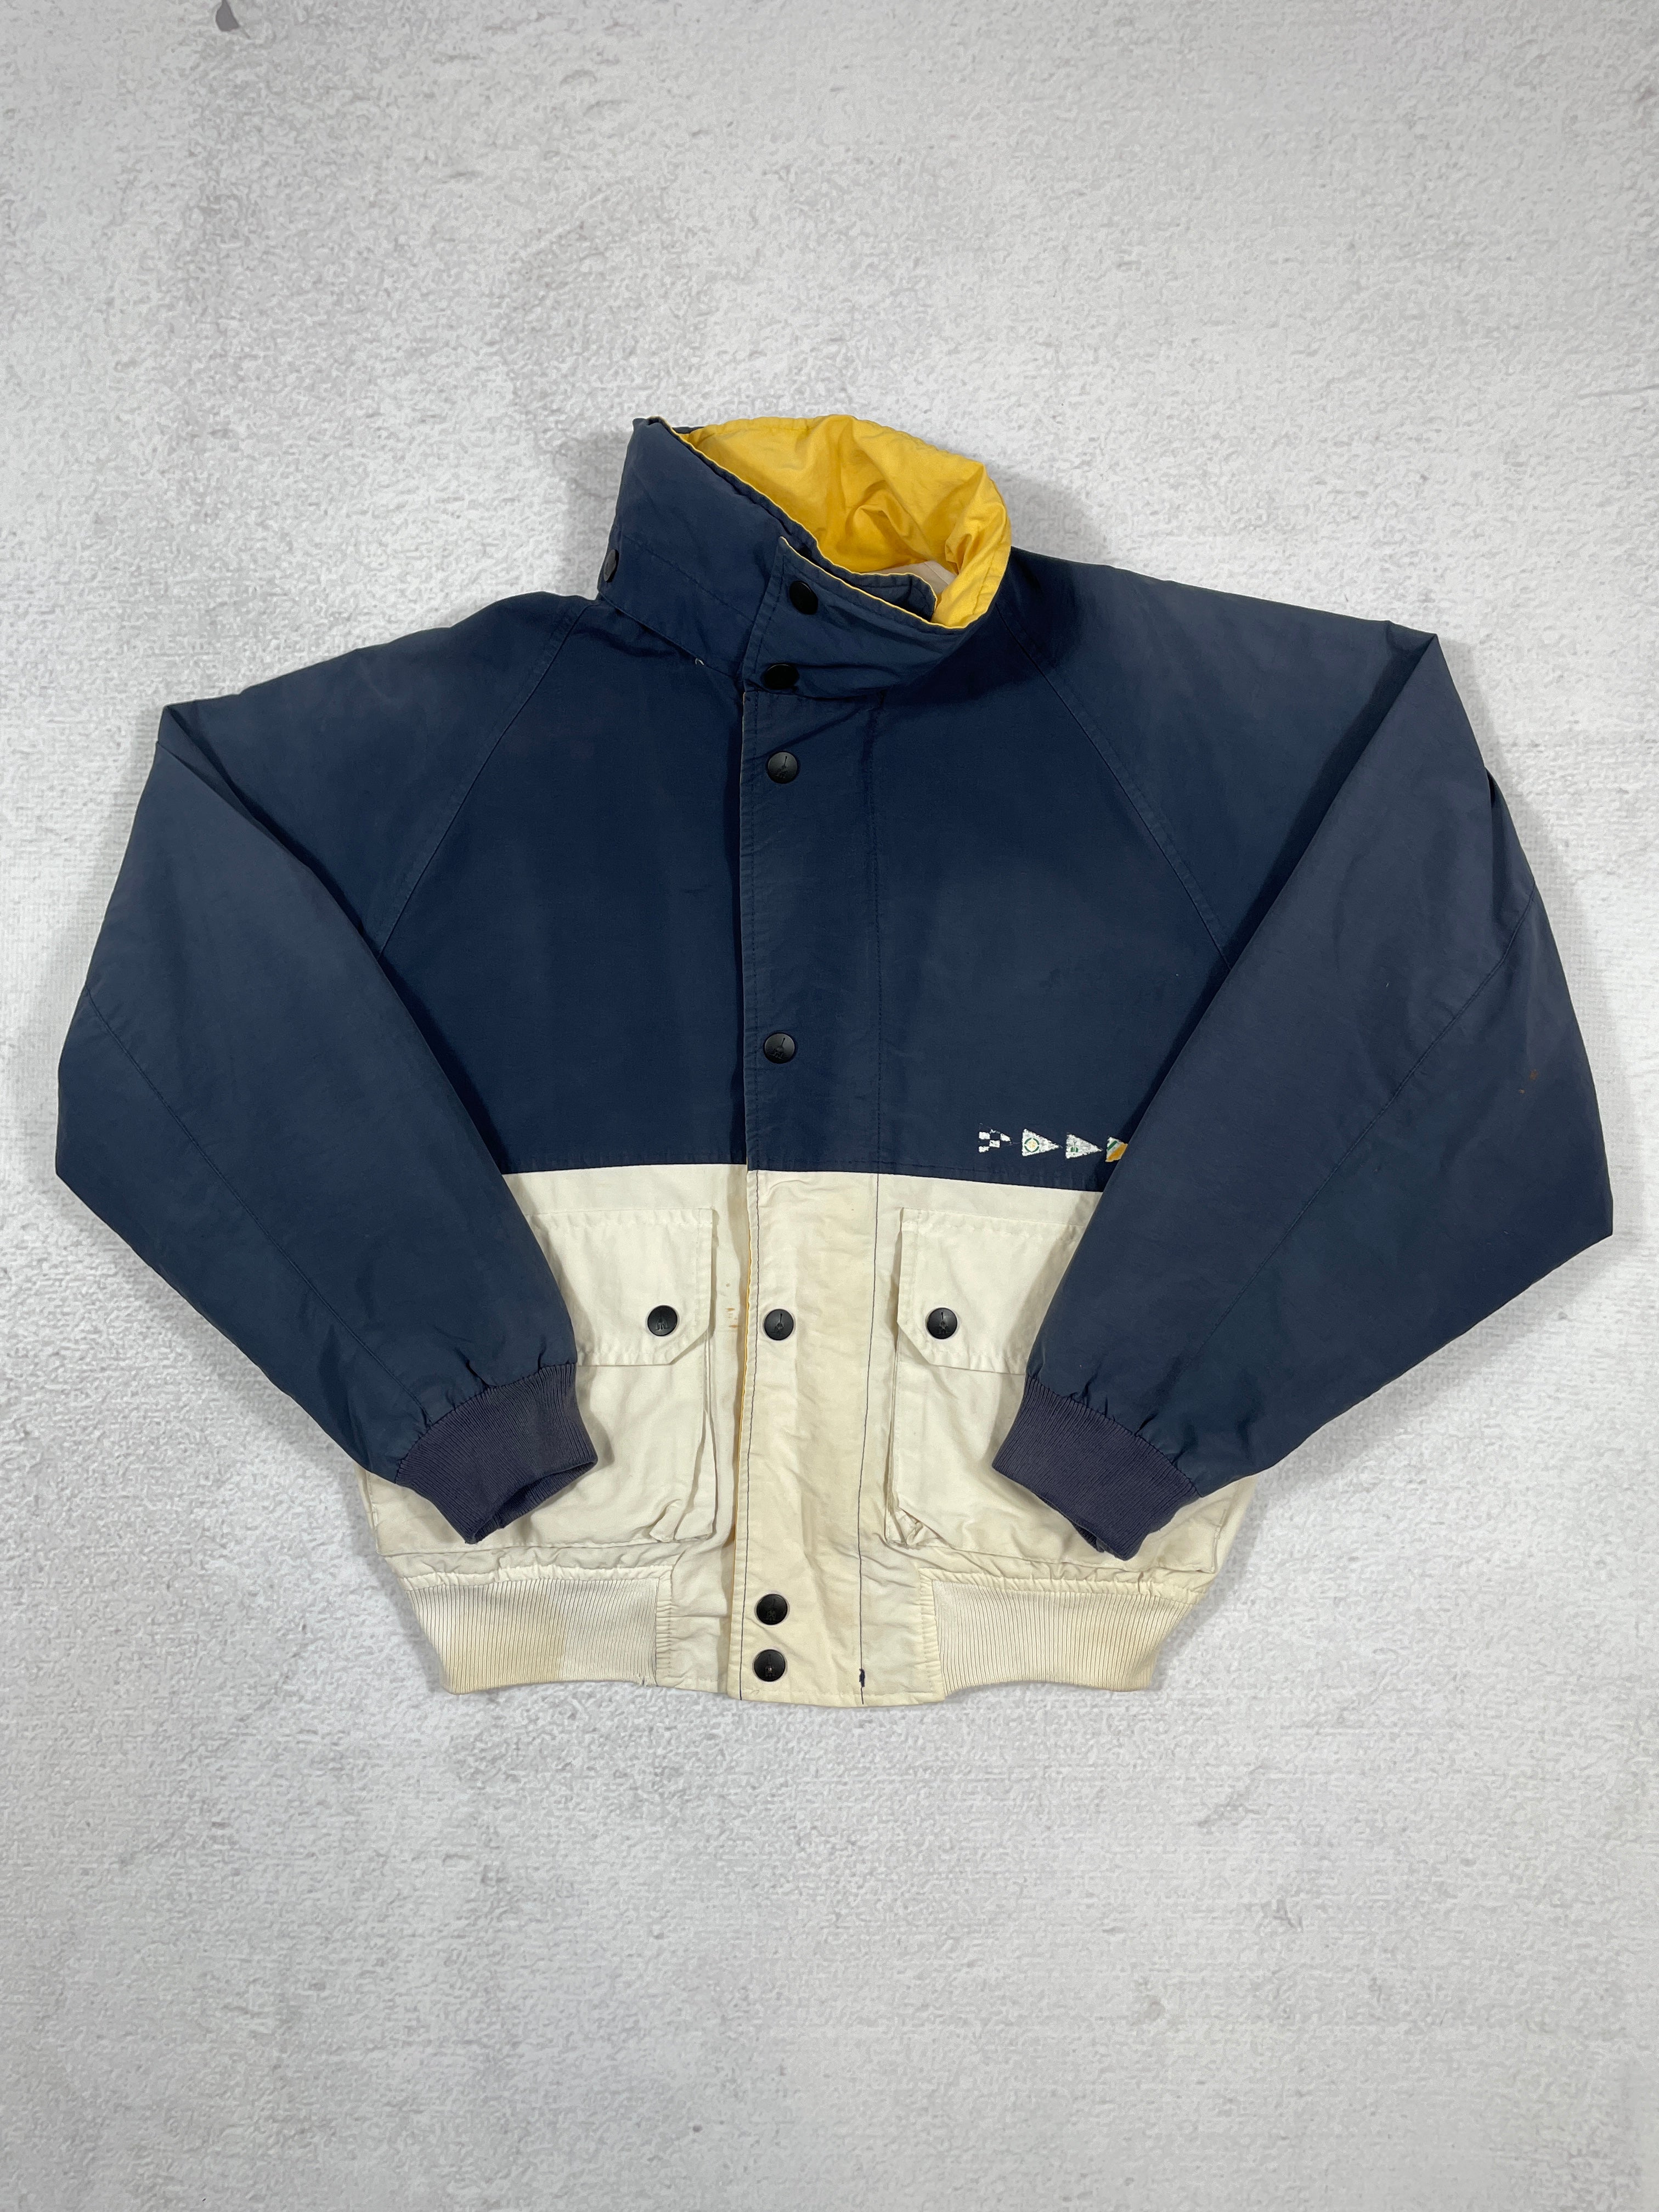 Vintage Nautica Lightweight Jacket - Men's Small